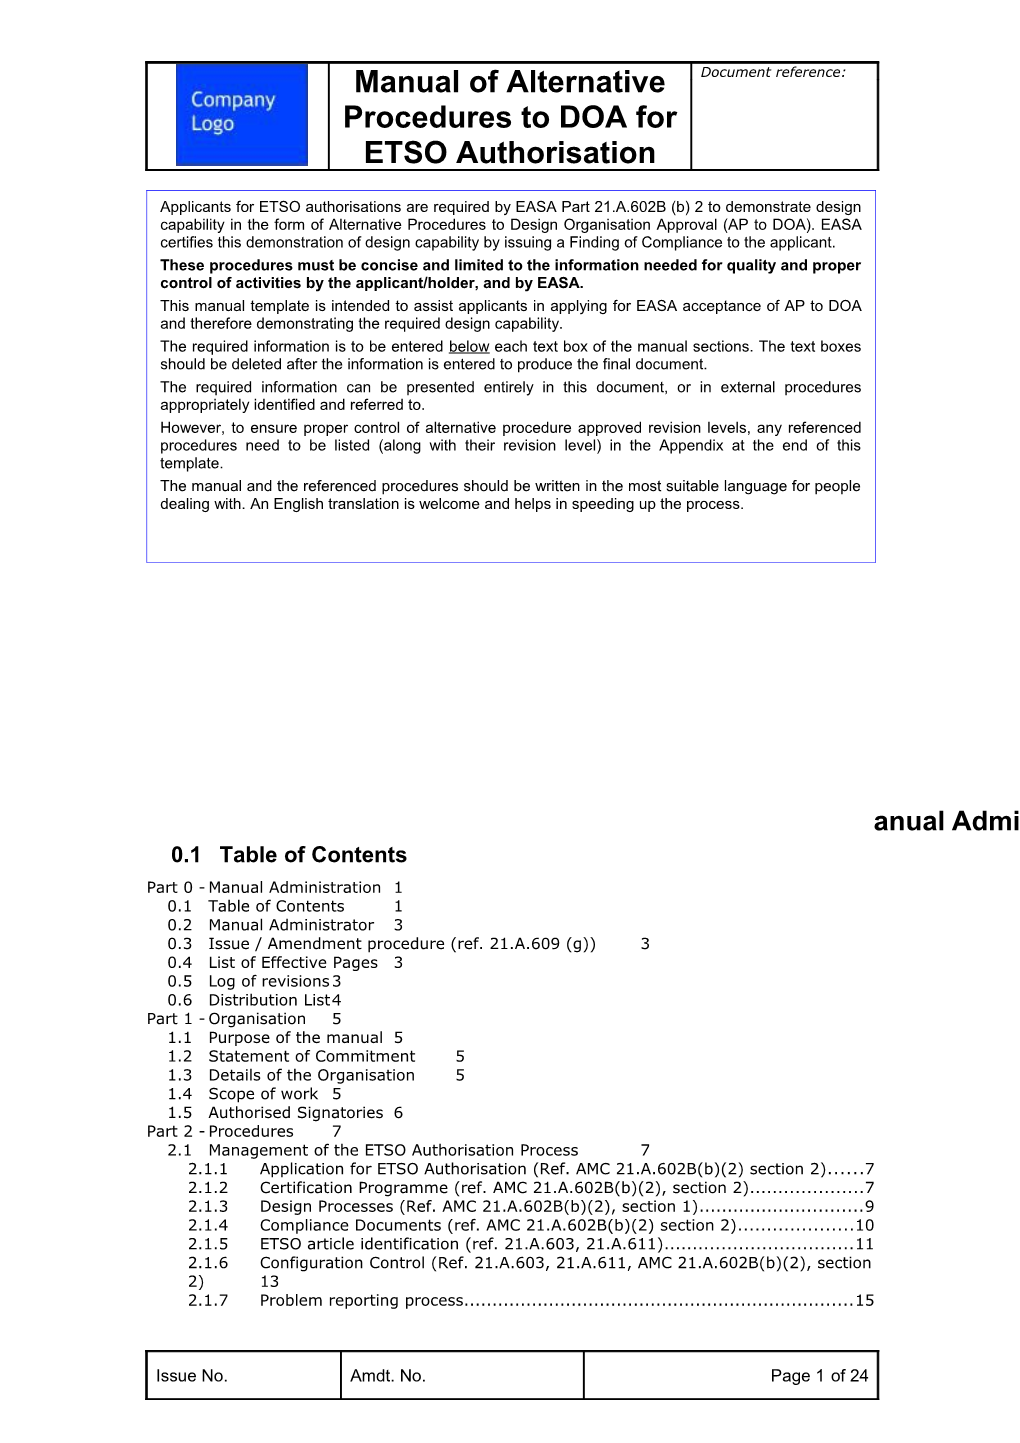 Manual of Alternative Procedures to DOA for ETSO Authorisation